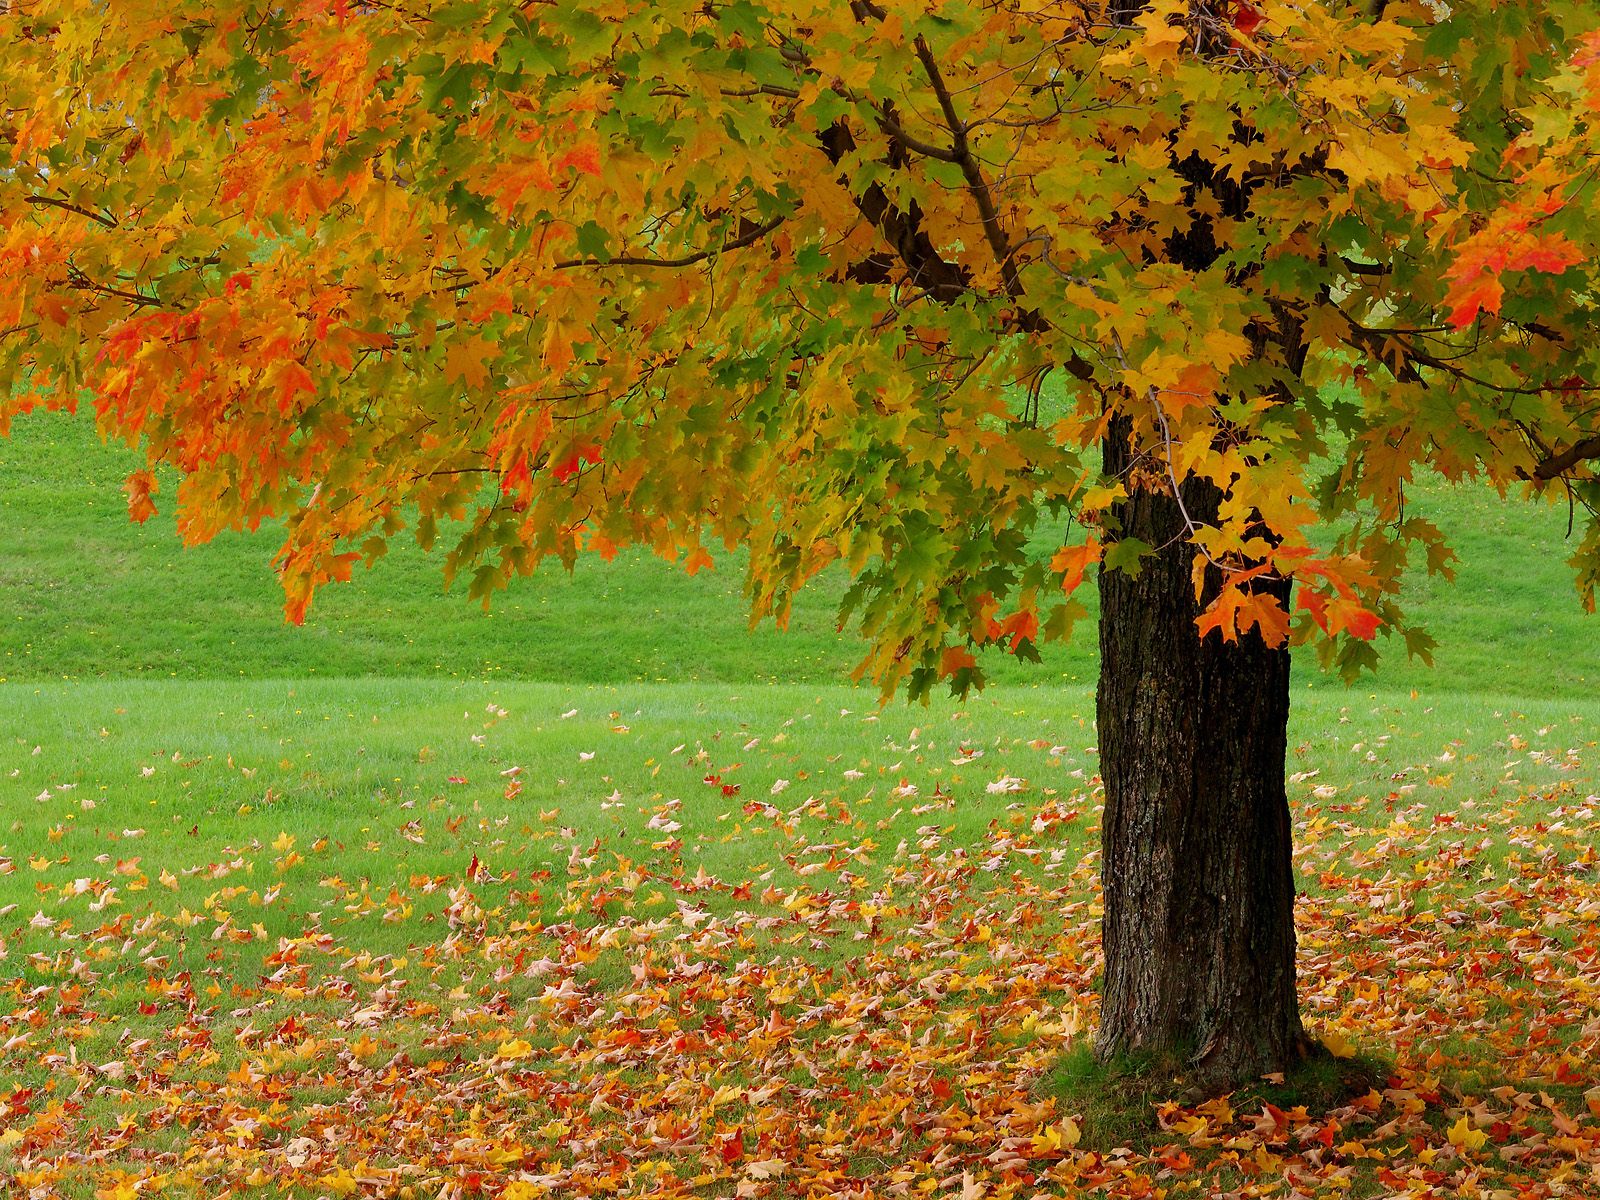 beautiful autumn season wallpaper hd beautiful autumn season wallpaper